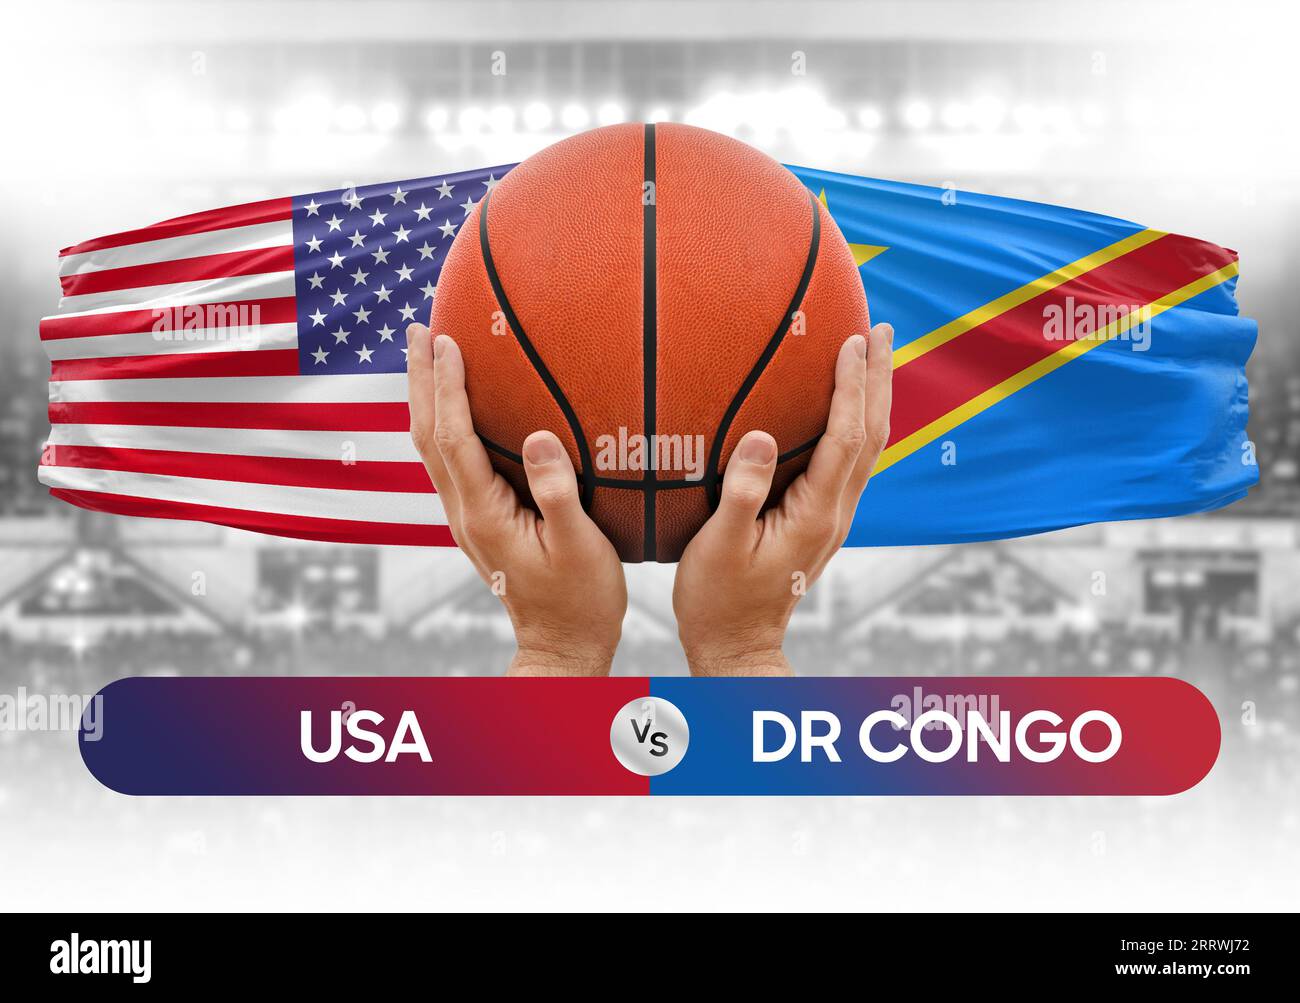 USA vs Dr Congo national basketball teams basket ball match competition cup concept image Stock Photo